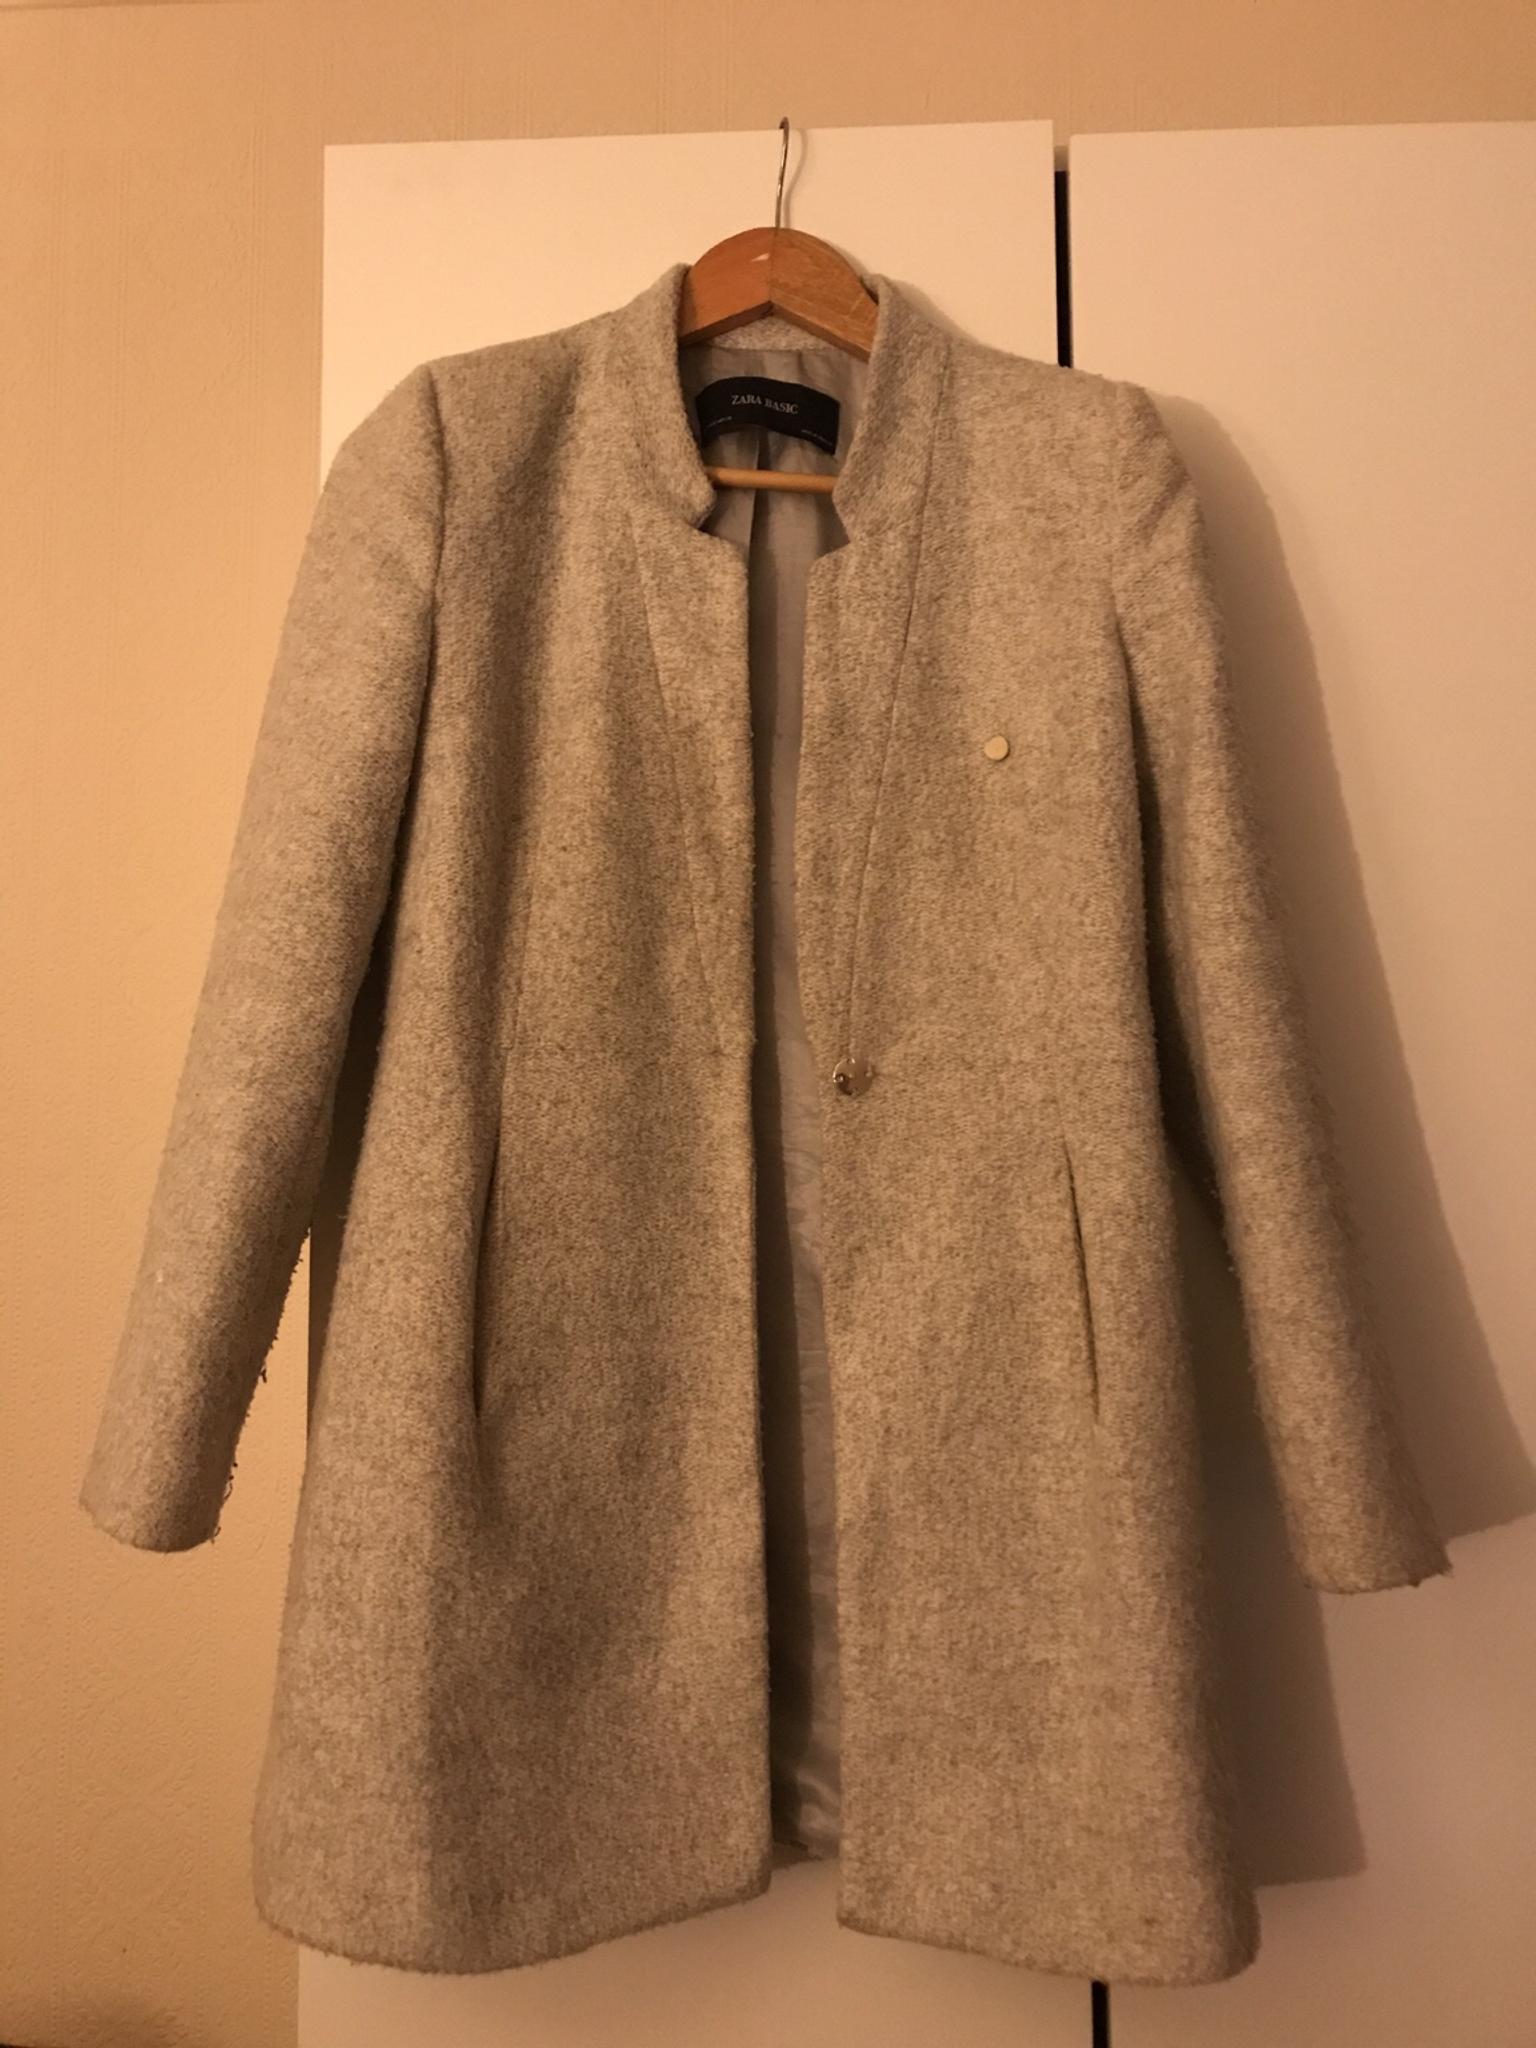 Zara basic coat in DA11 Tilbury for £18 